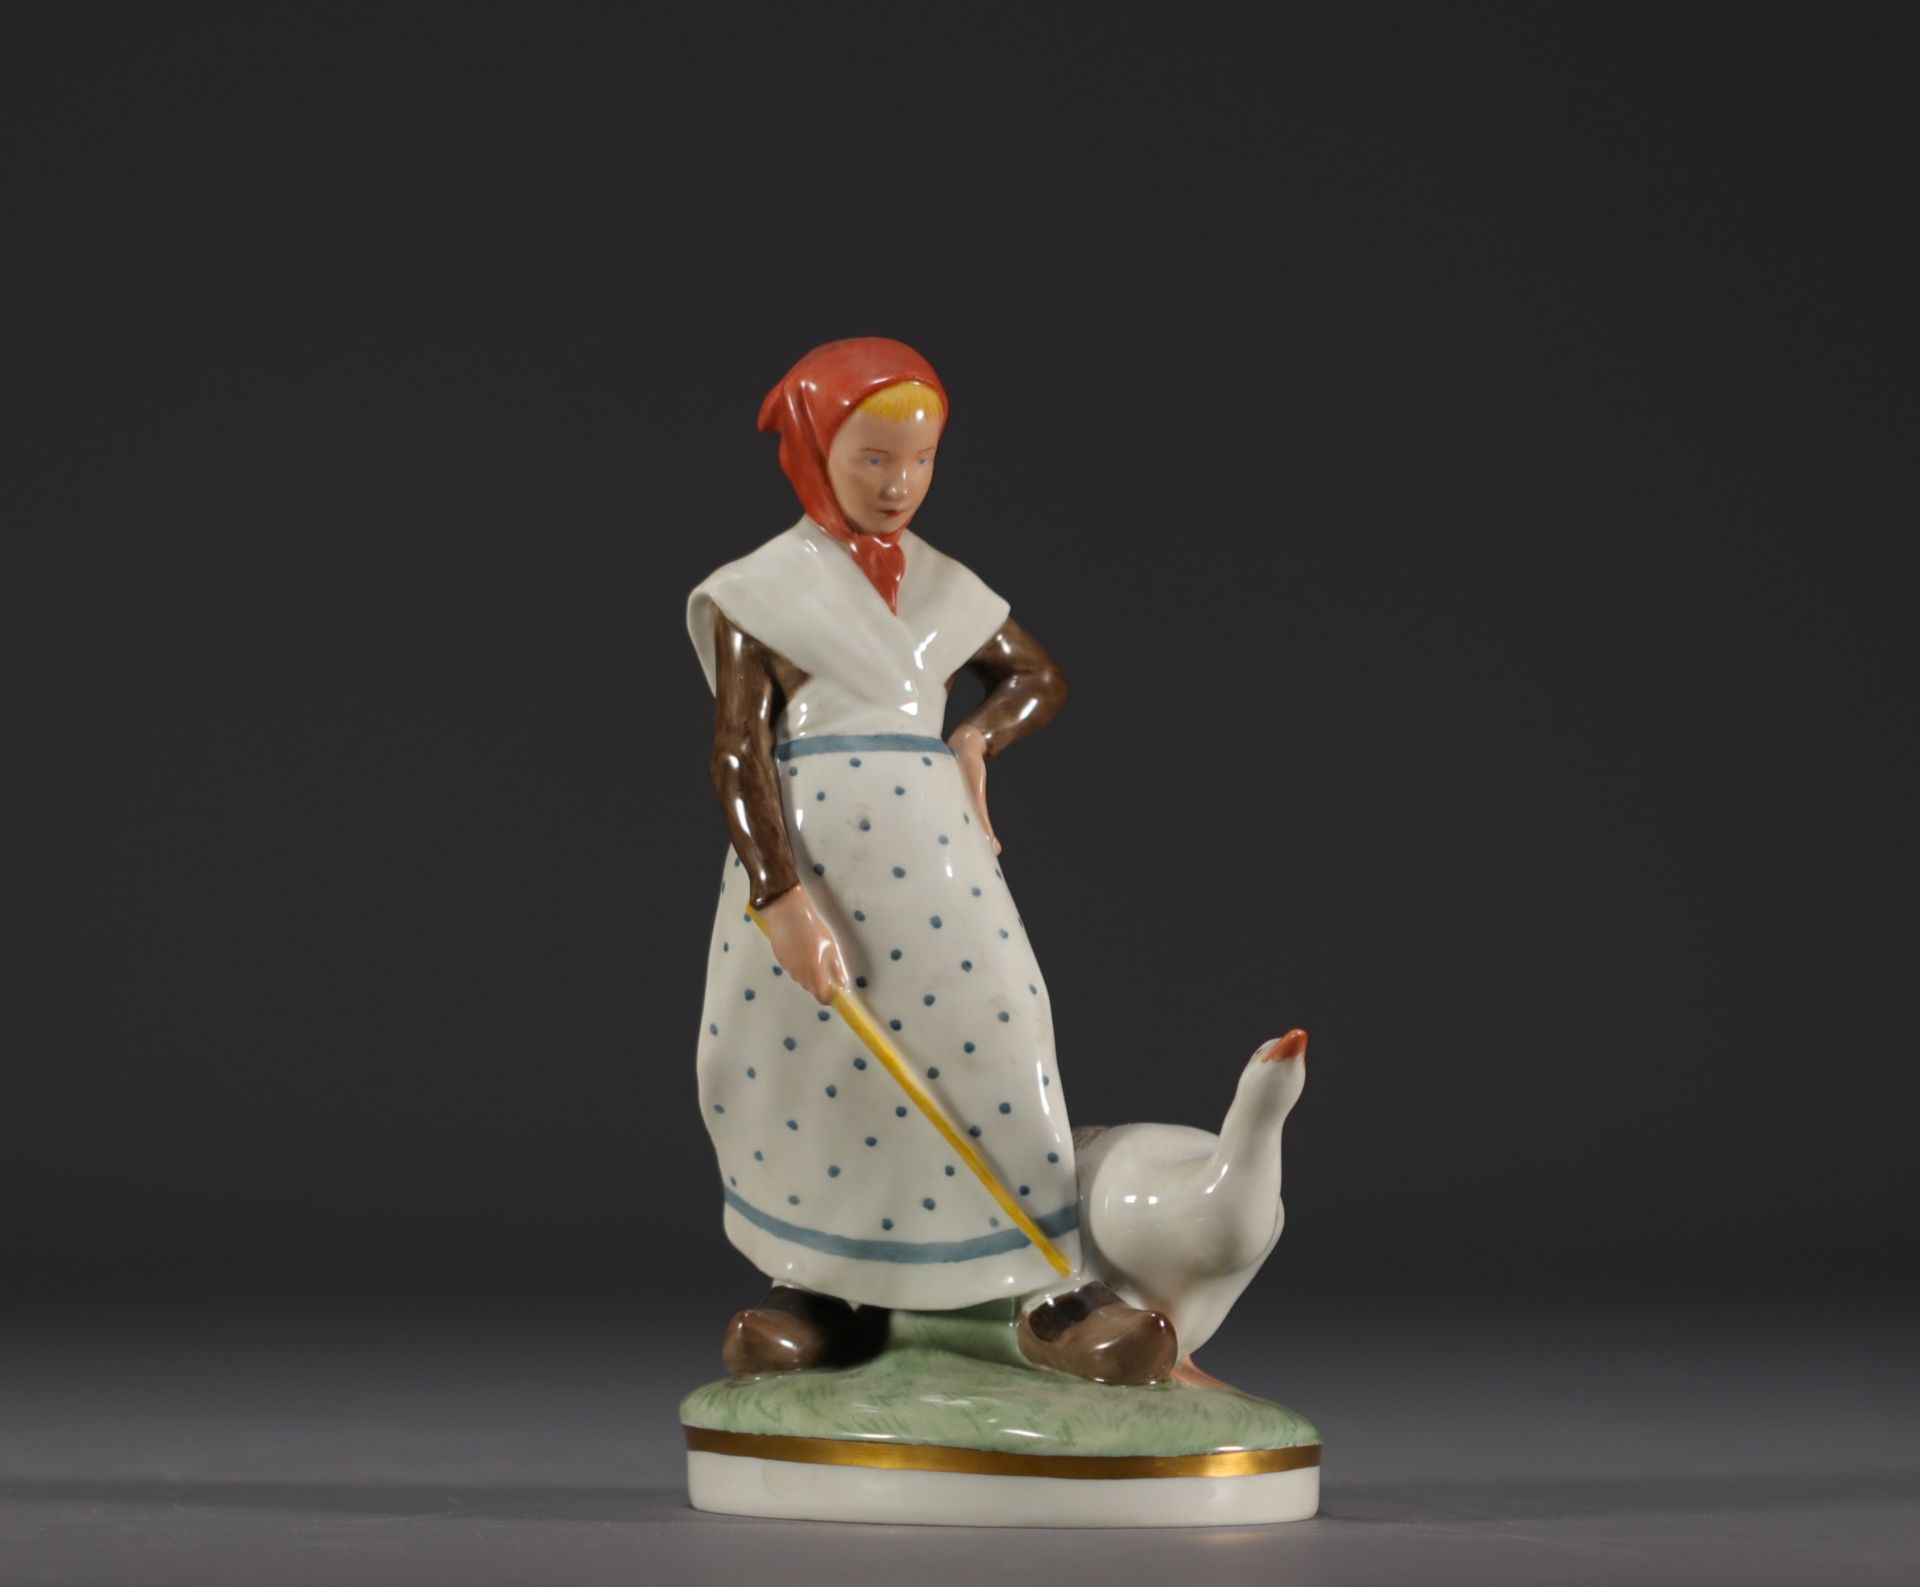 Christian THOMSEN for Royal Copenhagen "Young girl and her goose" in enamelled porcelain, mark under